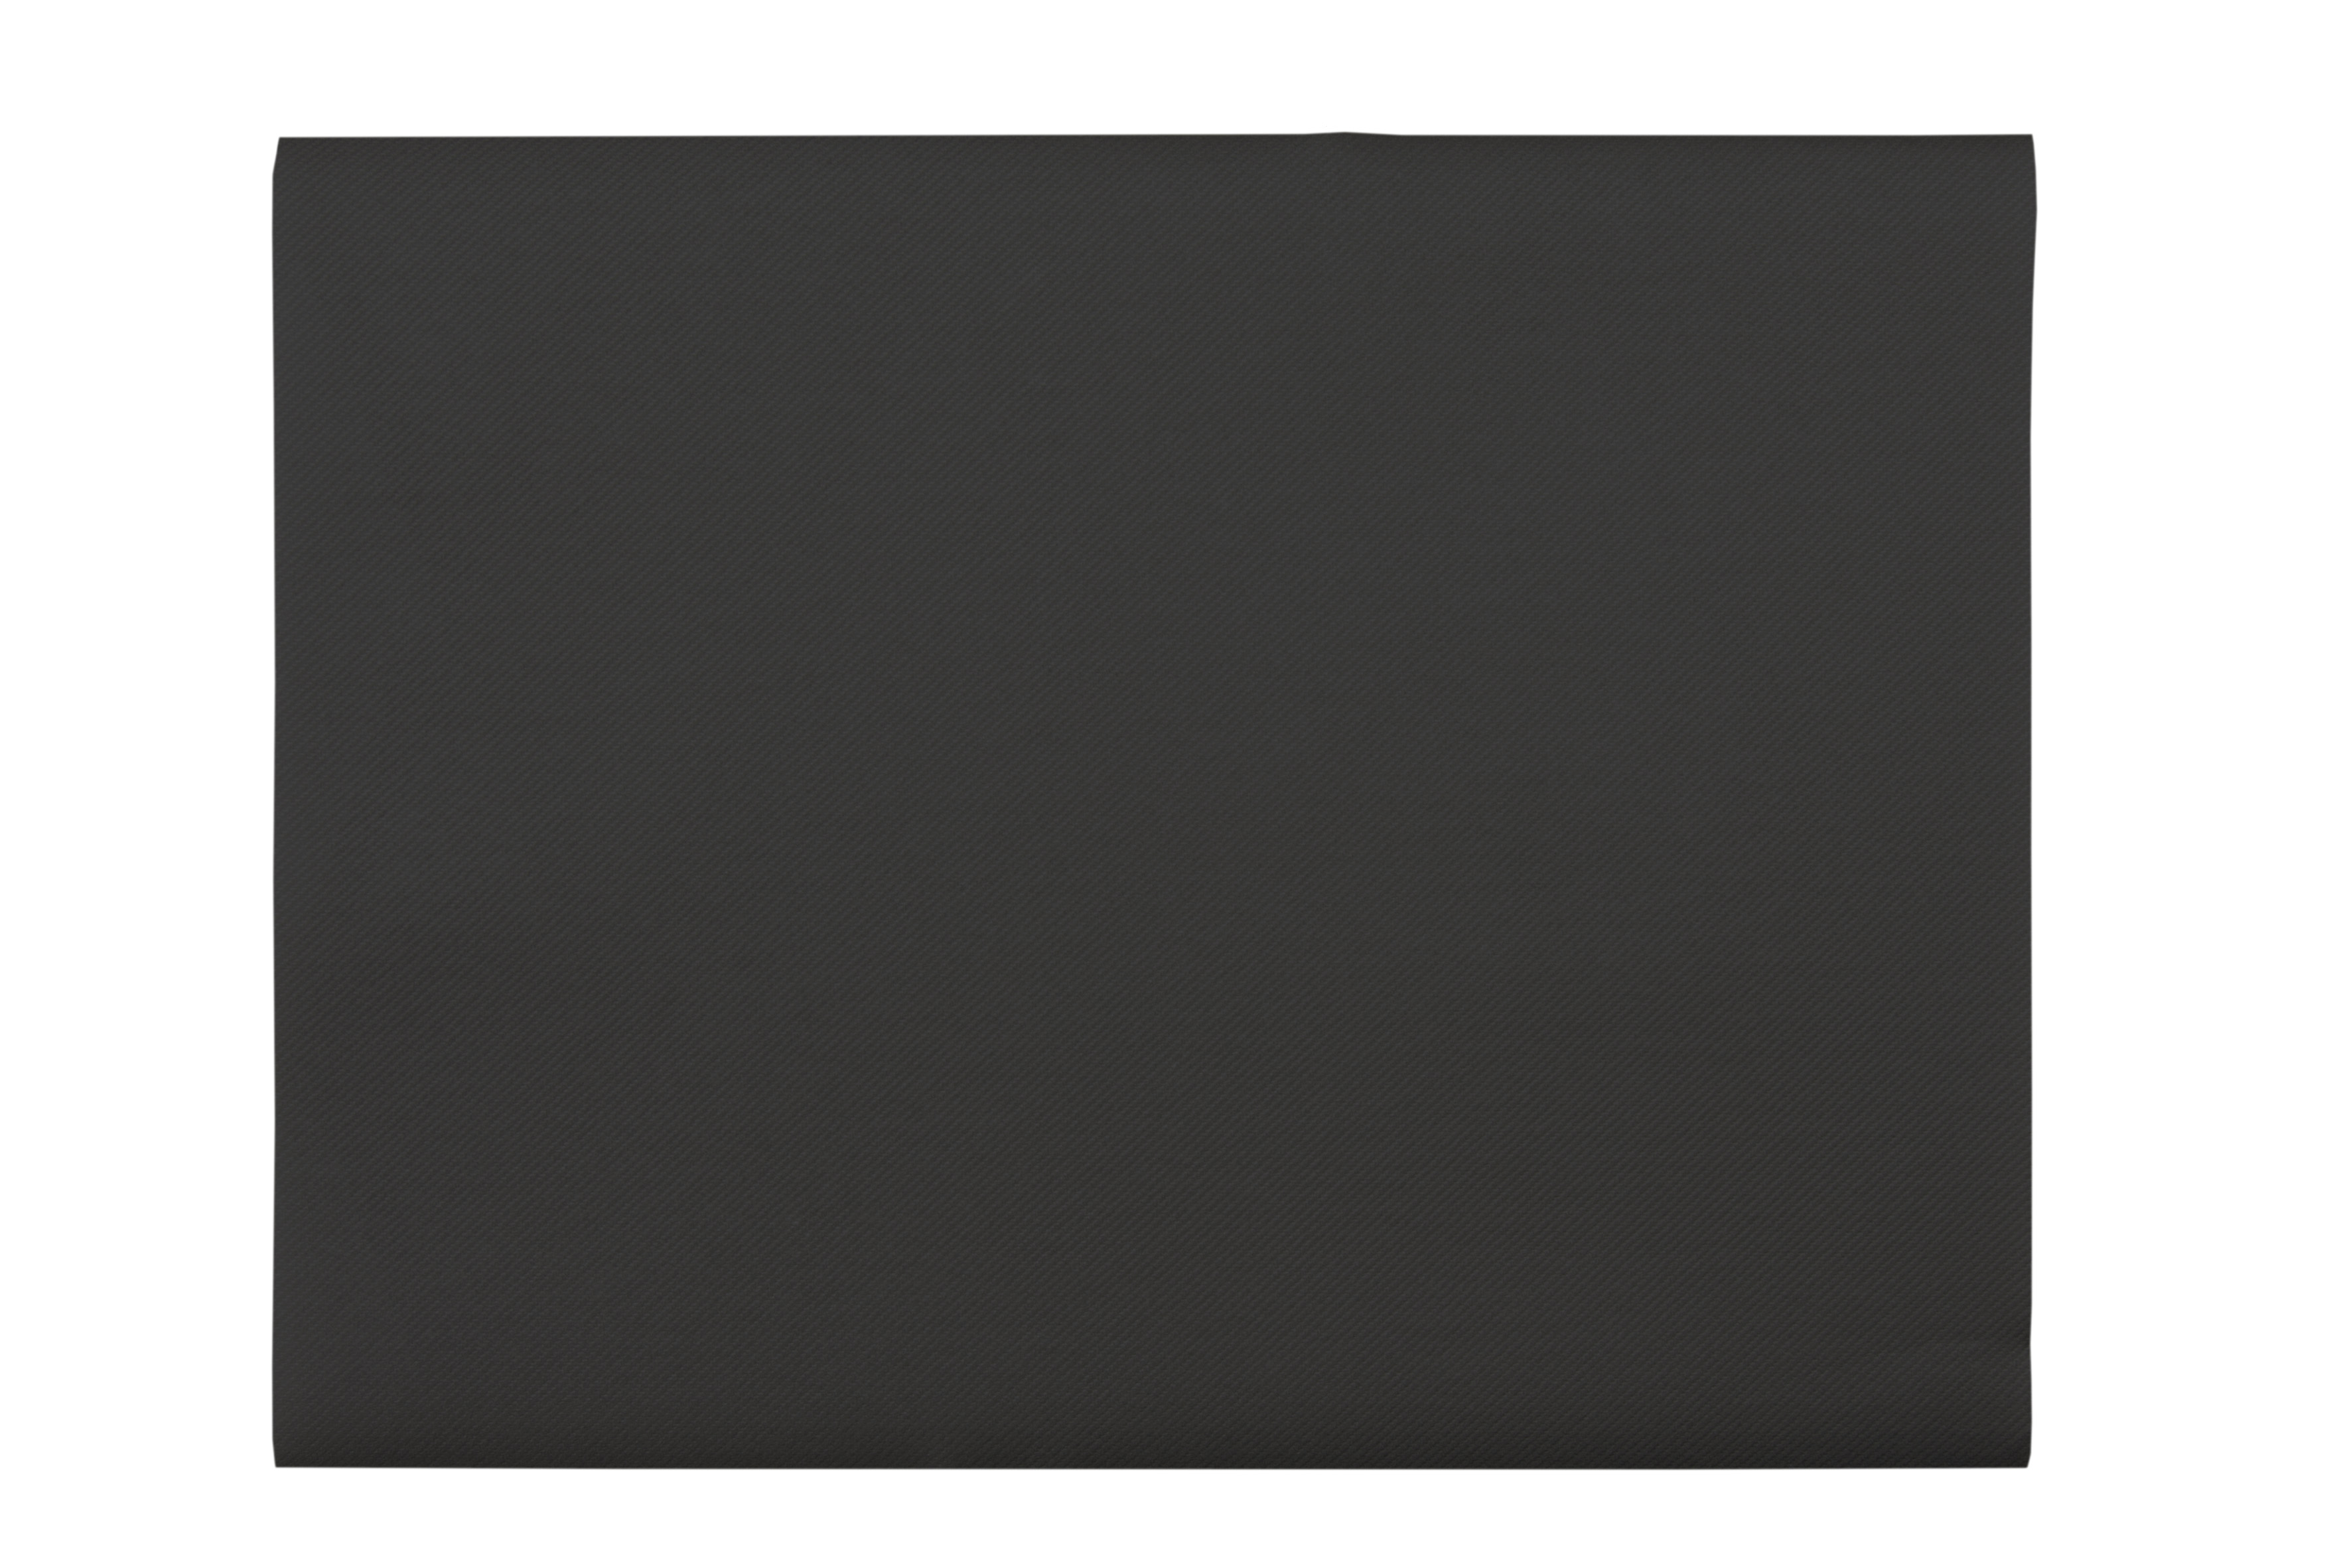 Mank Tischsets Linclass 40 x 30 cm, Basic schwarz